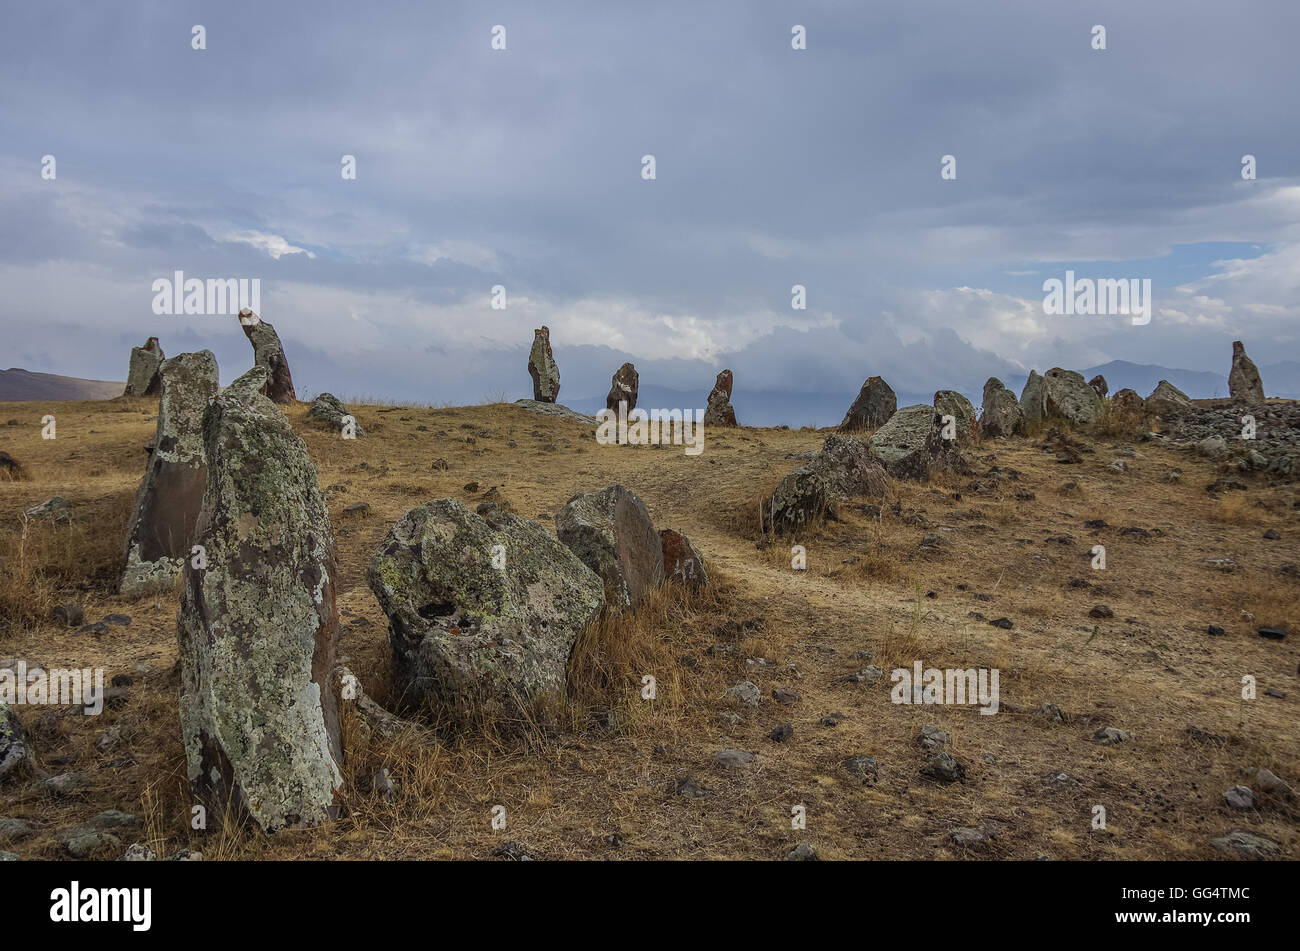 Grandi menhir megalitici di Zorats Karer (Carahunge) - preistoria monumento megalitico in Armenia Foto Stock